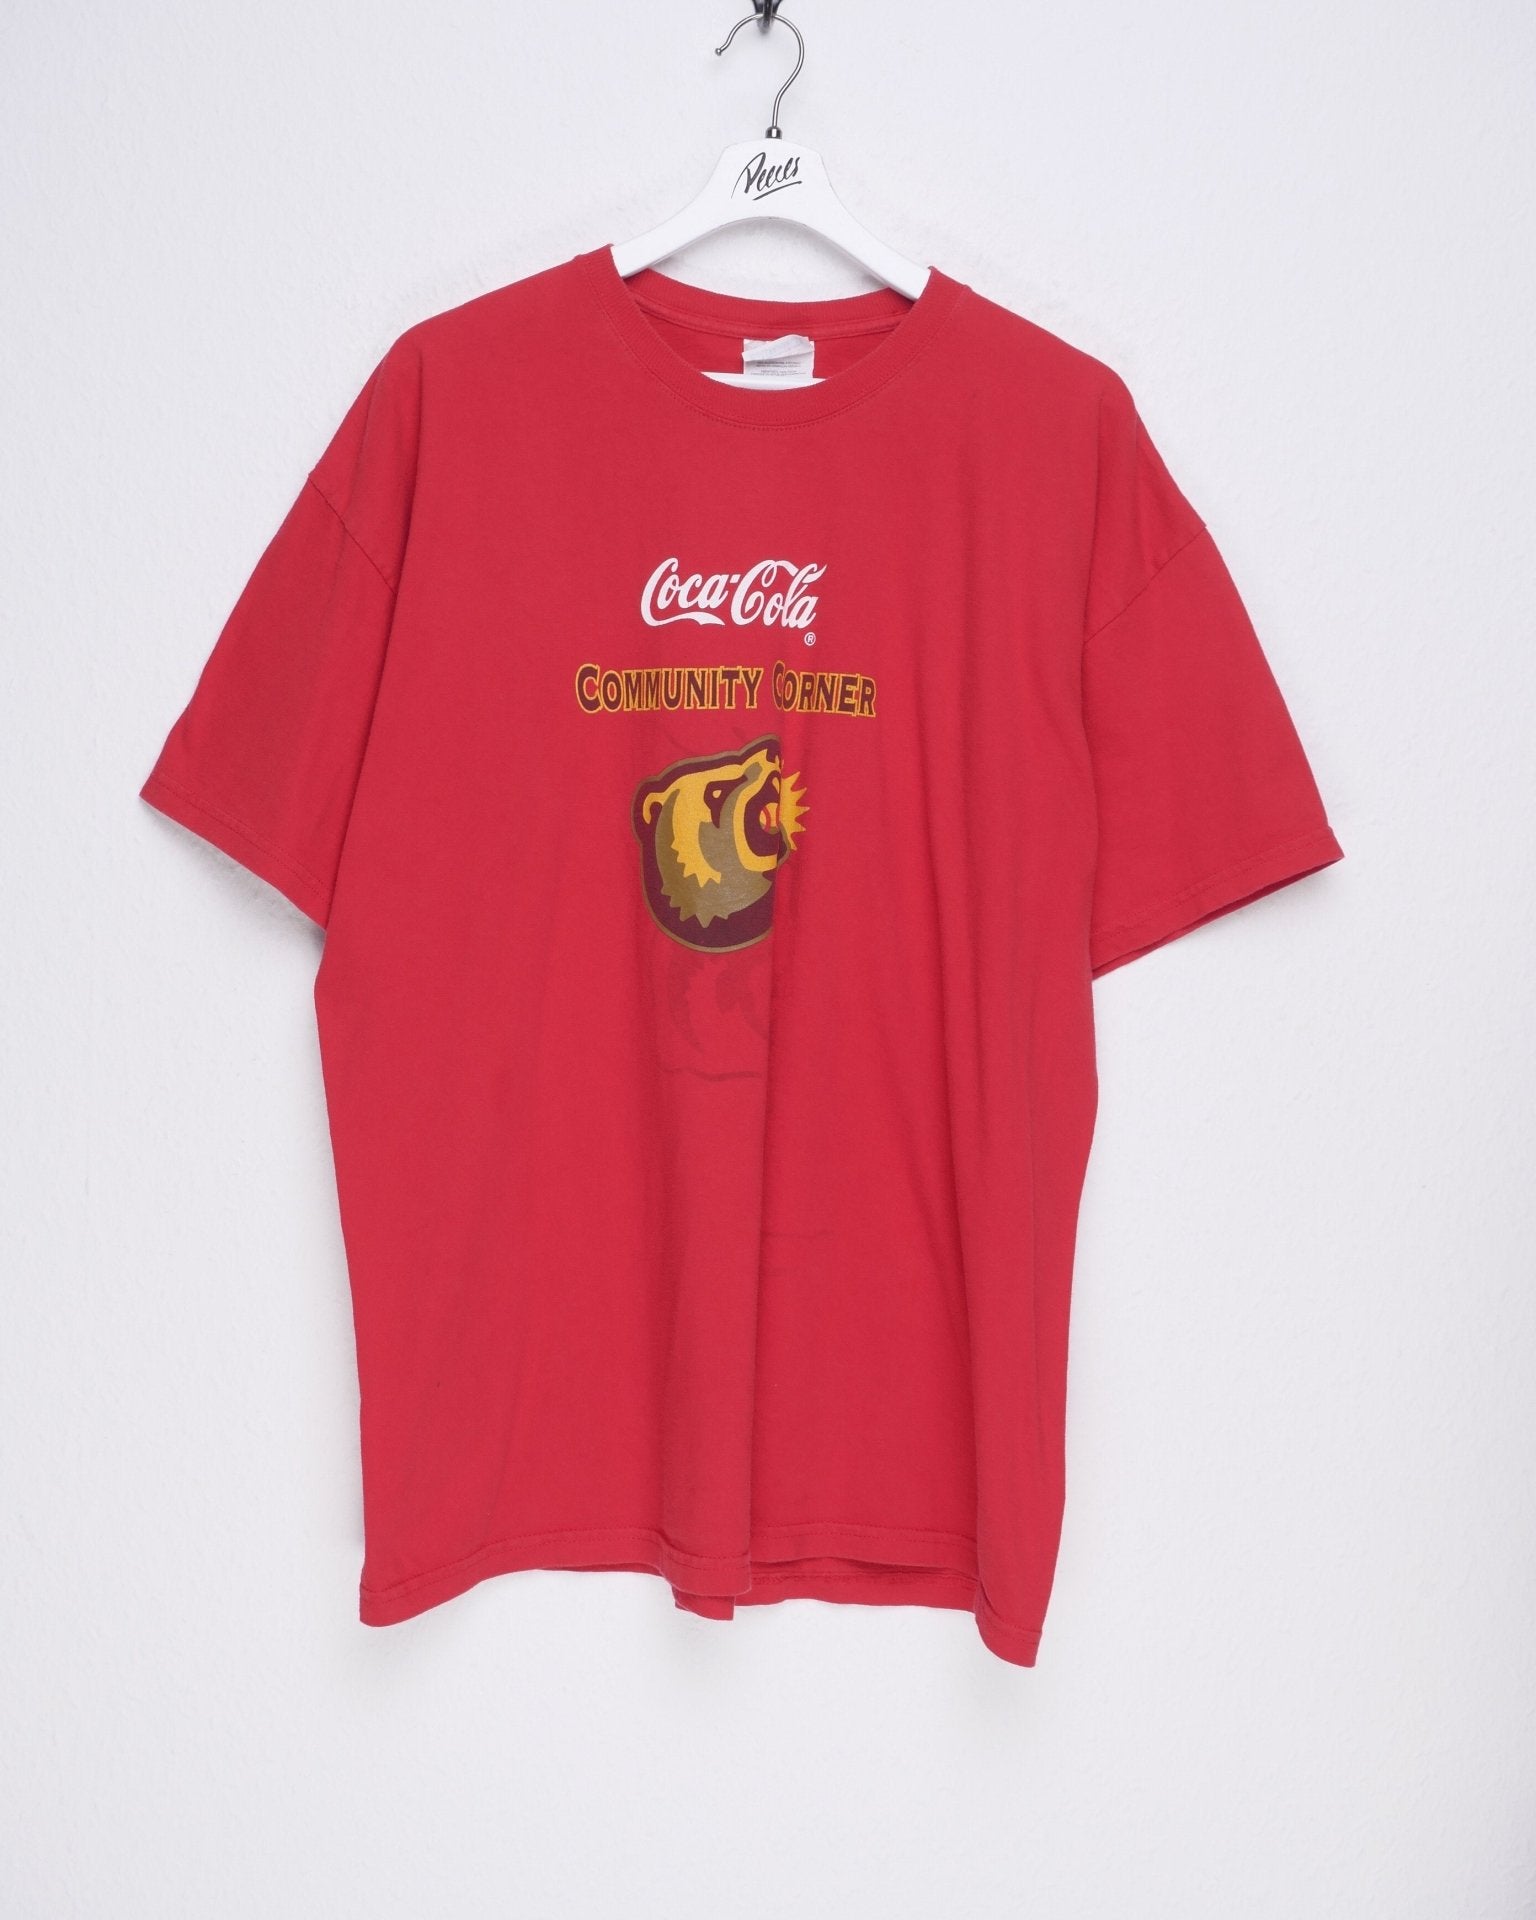 Coca-Cola Community Corner printed Graphic red Shirt - Peeces